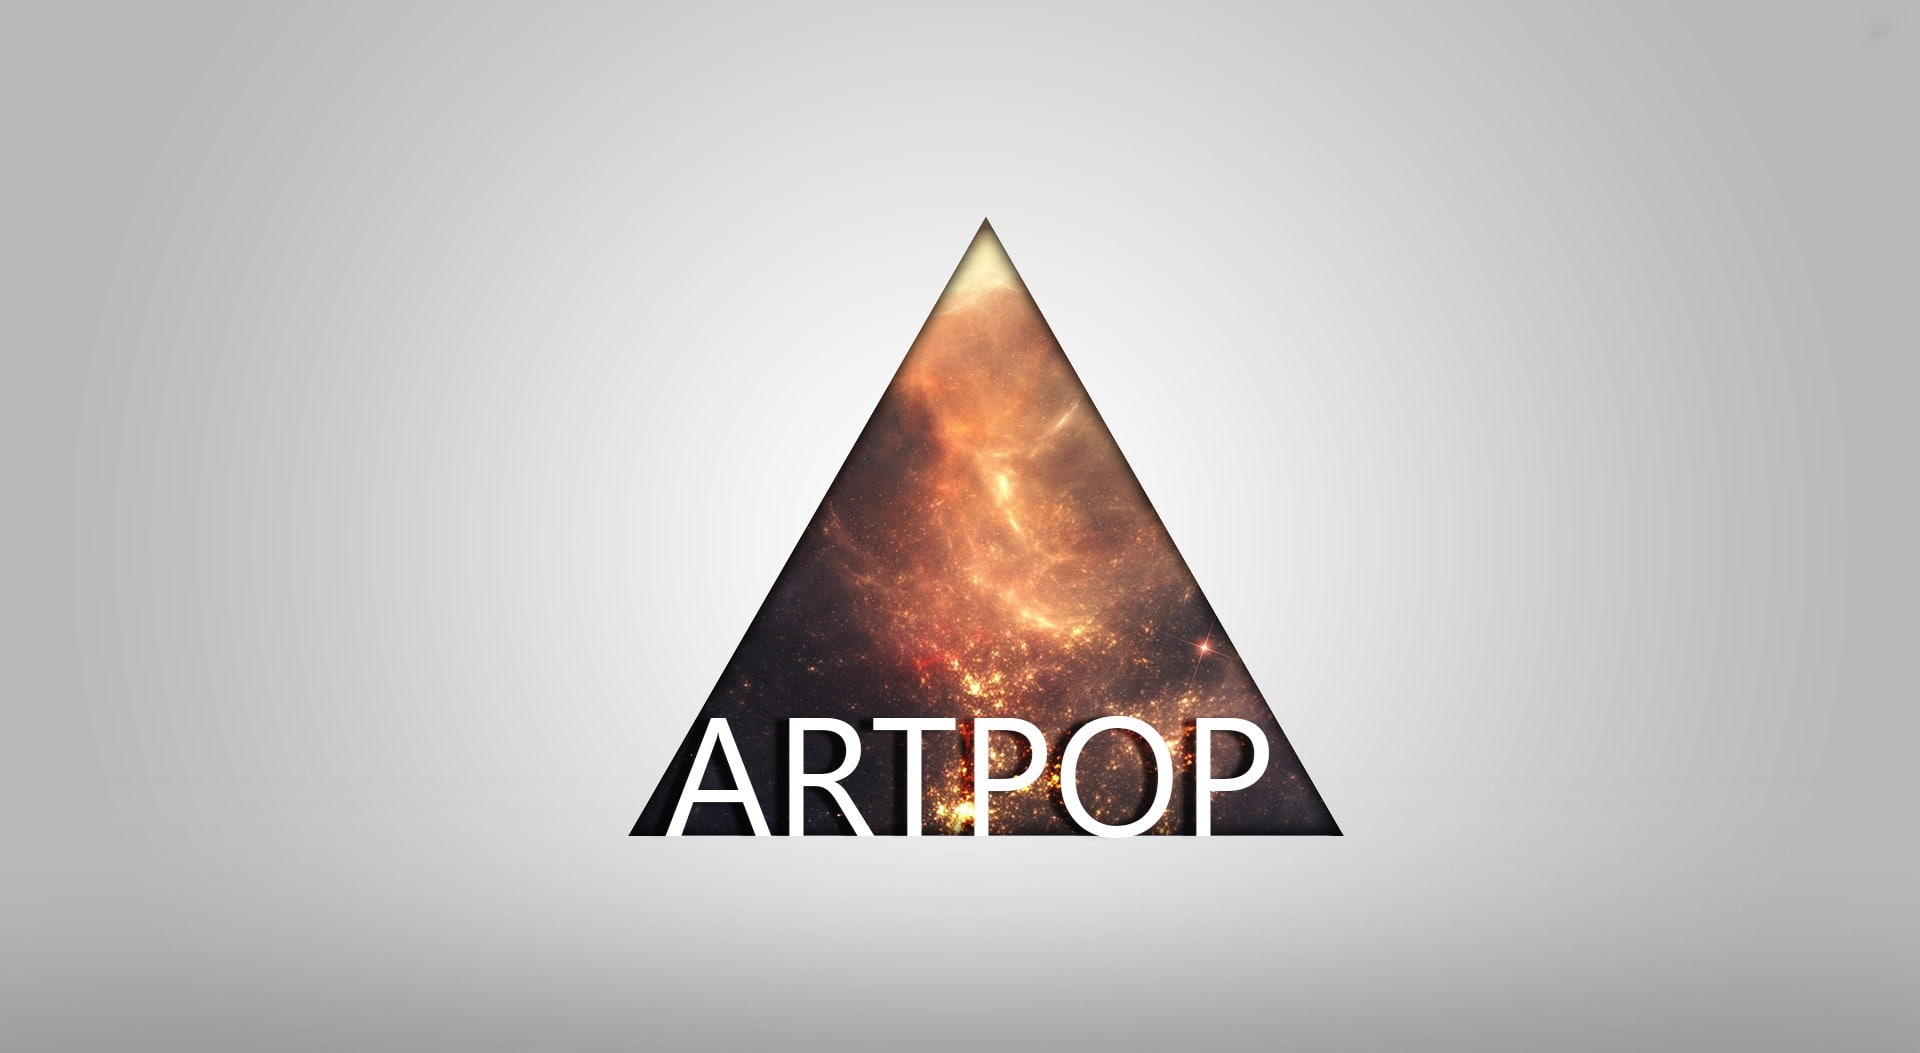 Artpop, Music, Lady Gaga, applause, venus, studio shot, triangle shape